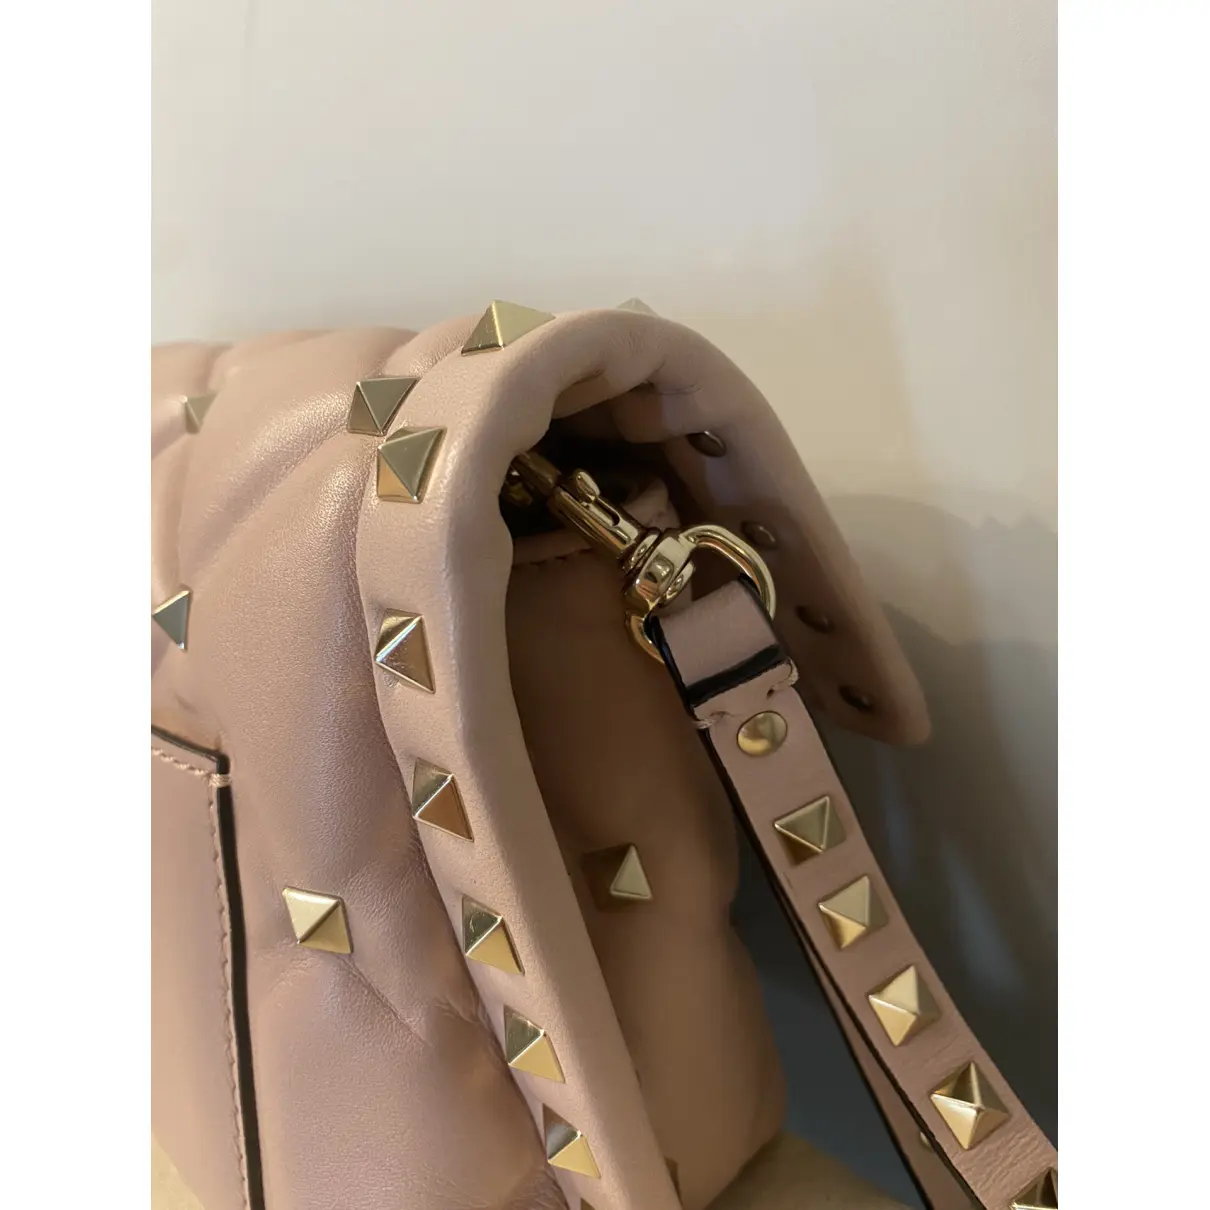 CandyStud leather handbag Valentino Garavani